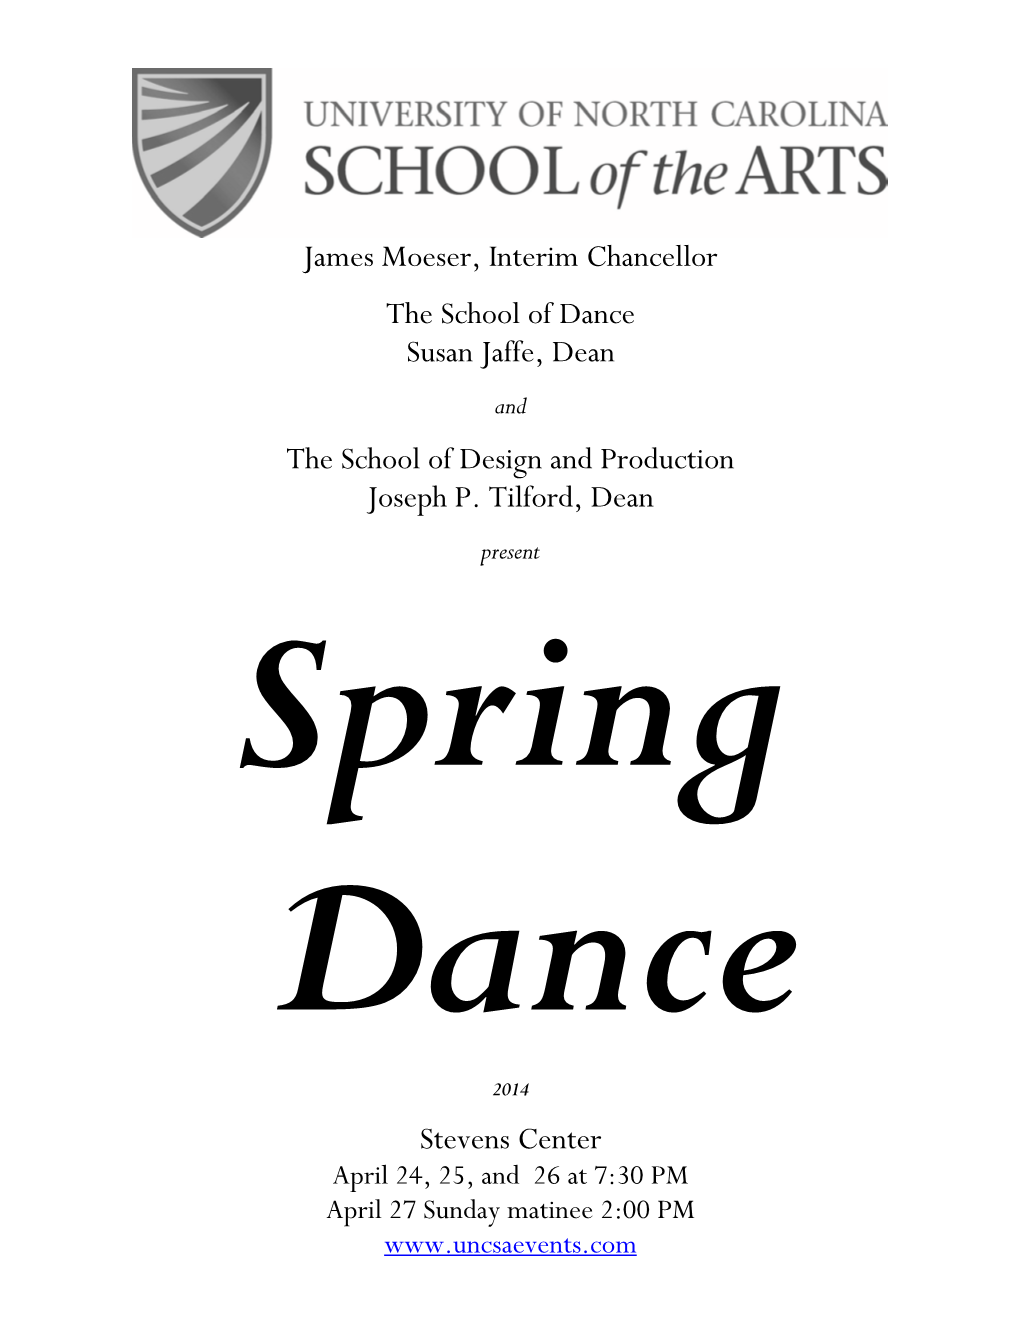 James Moeser, Interim Chancellor the School of Dance Susan Jaffe